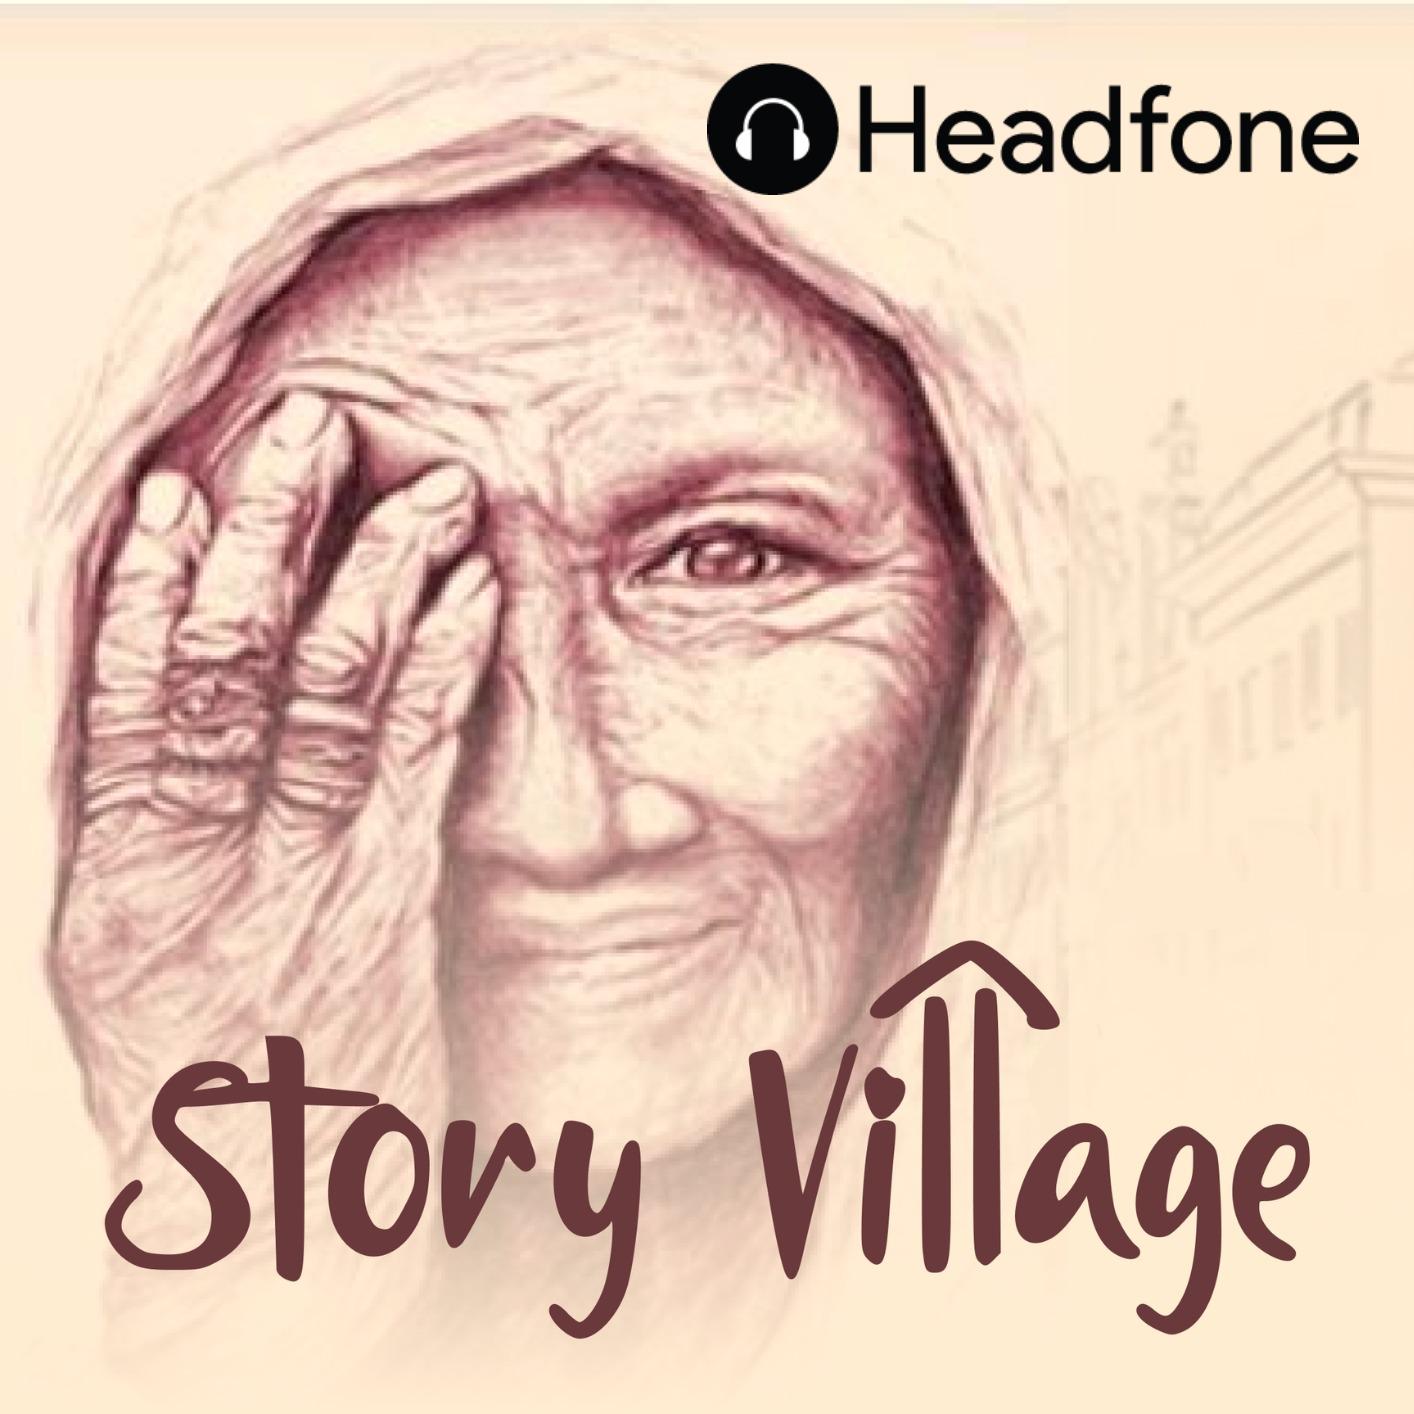 Story Village by Headfone